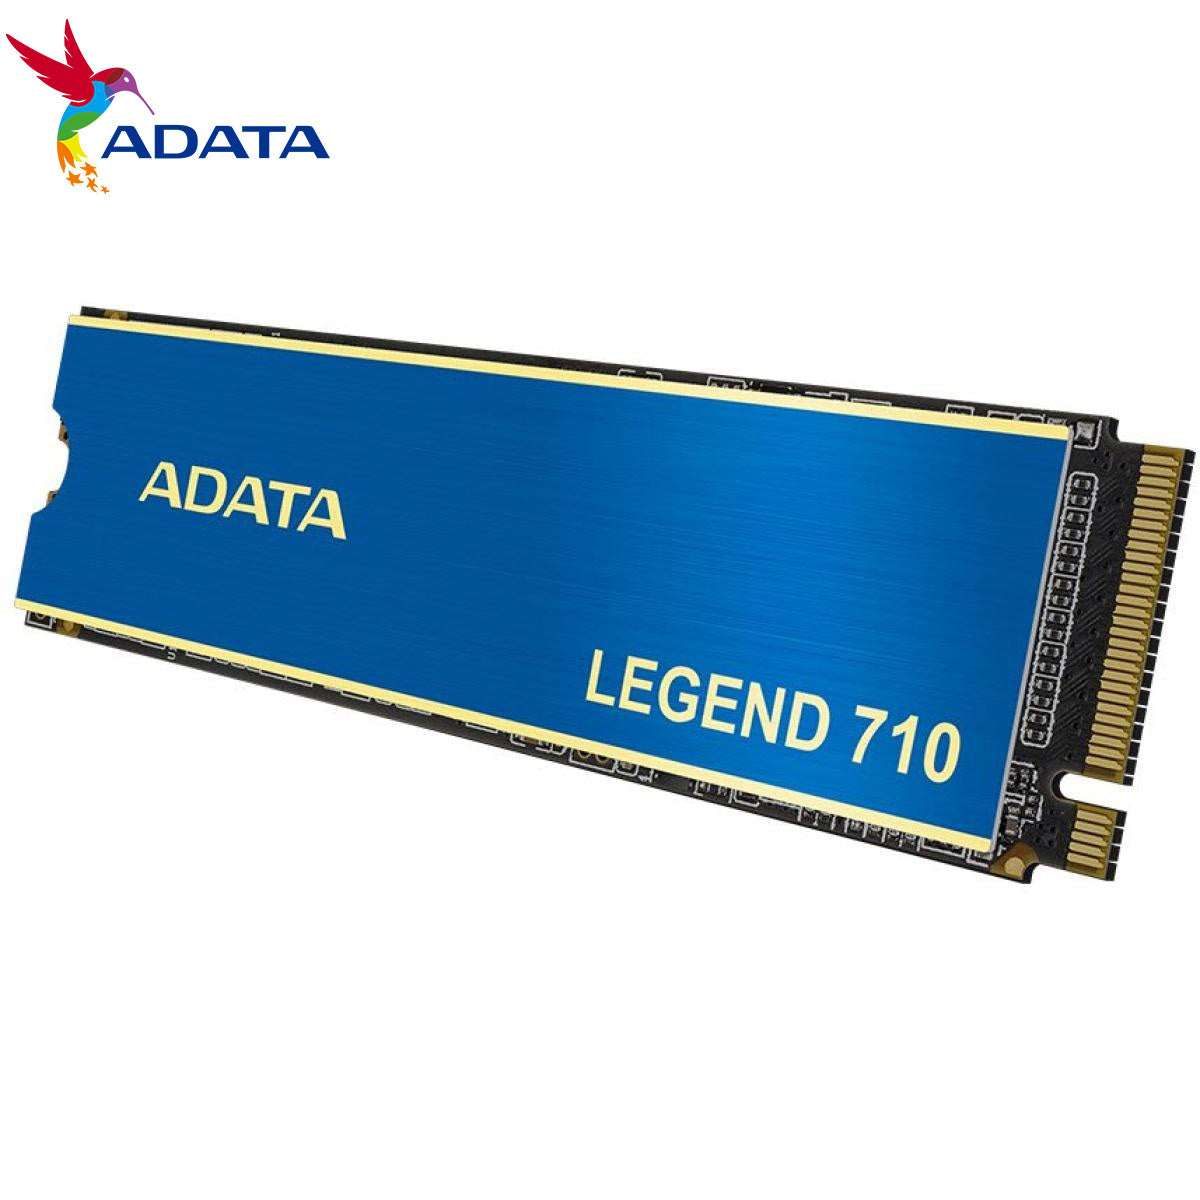 ADATA LEGEND 710 PCIe Gen3 X4 M.2 2280 Solid State Drive 512 GB